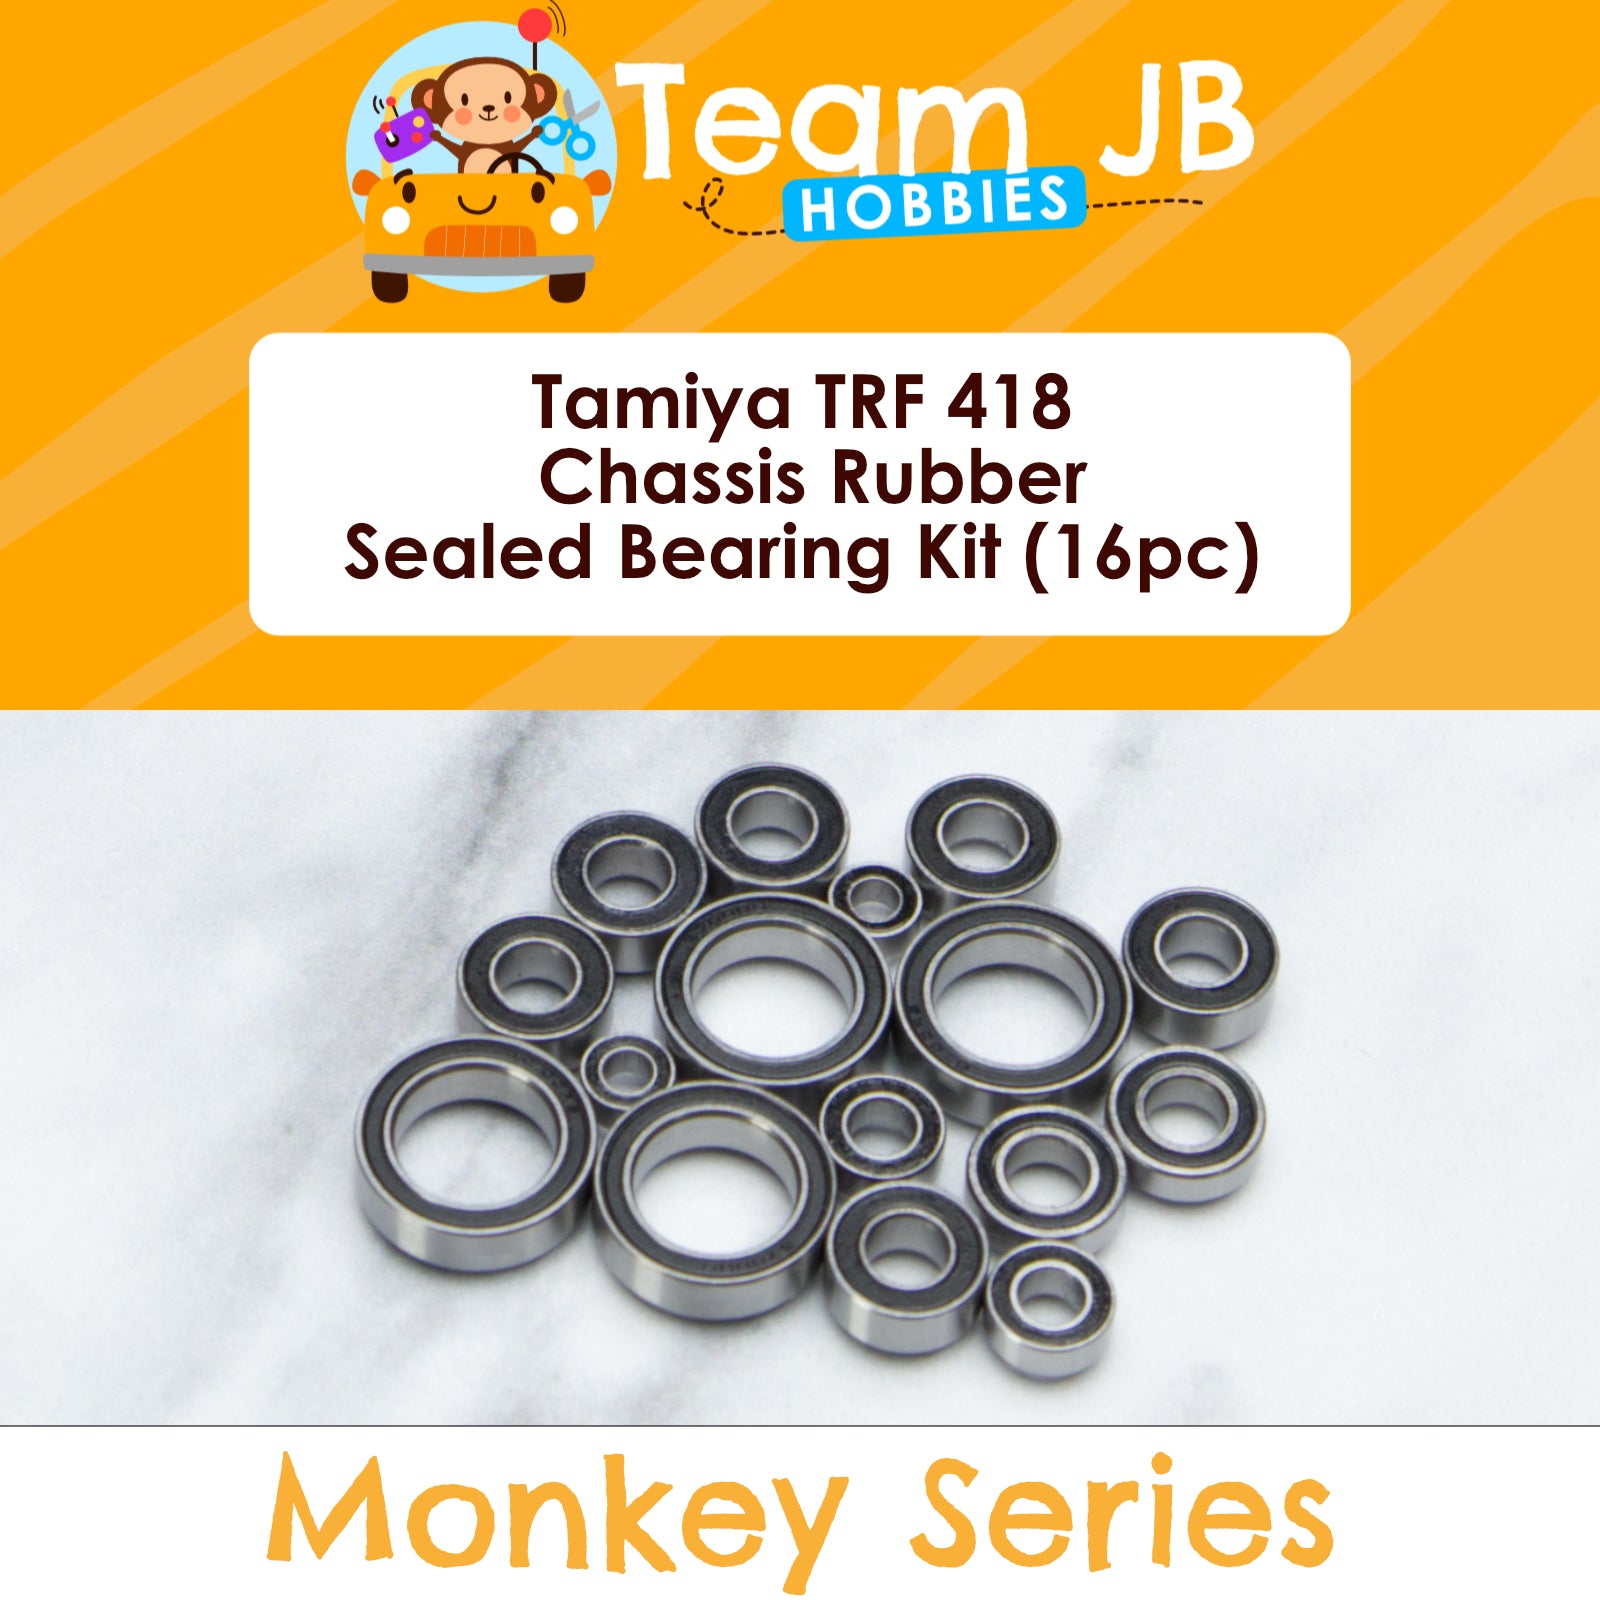 Tamiya TRF 418 Chassis Rubber - Sealed Bearing Kit